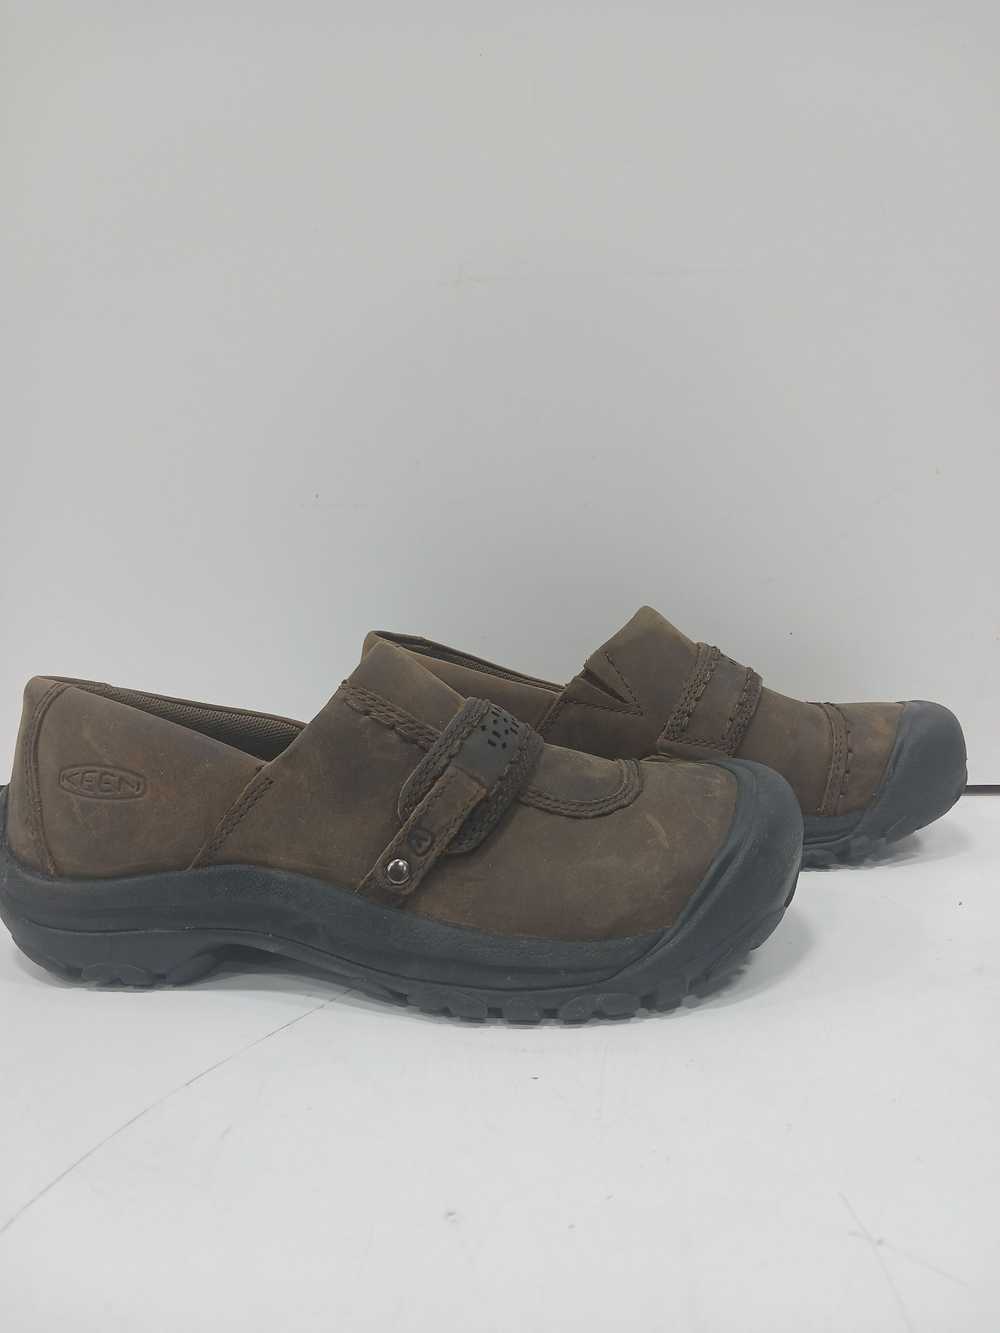 Keen 'Kaci' Brown Slip On Shoes Women's Size 7 - image 4